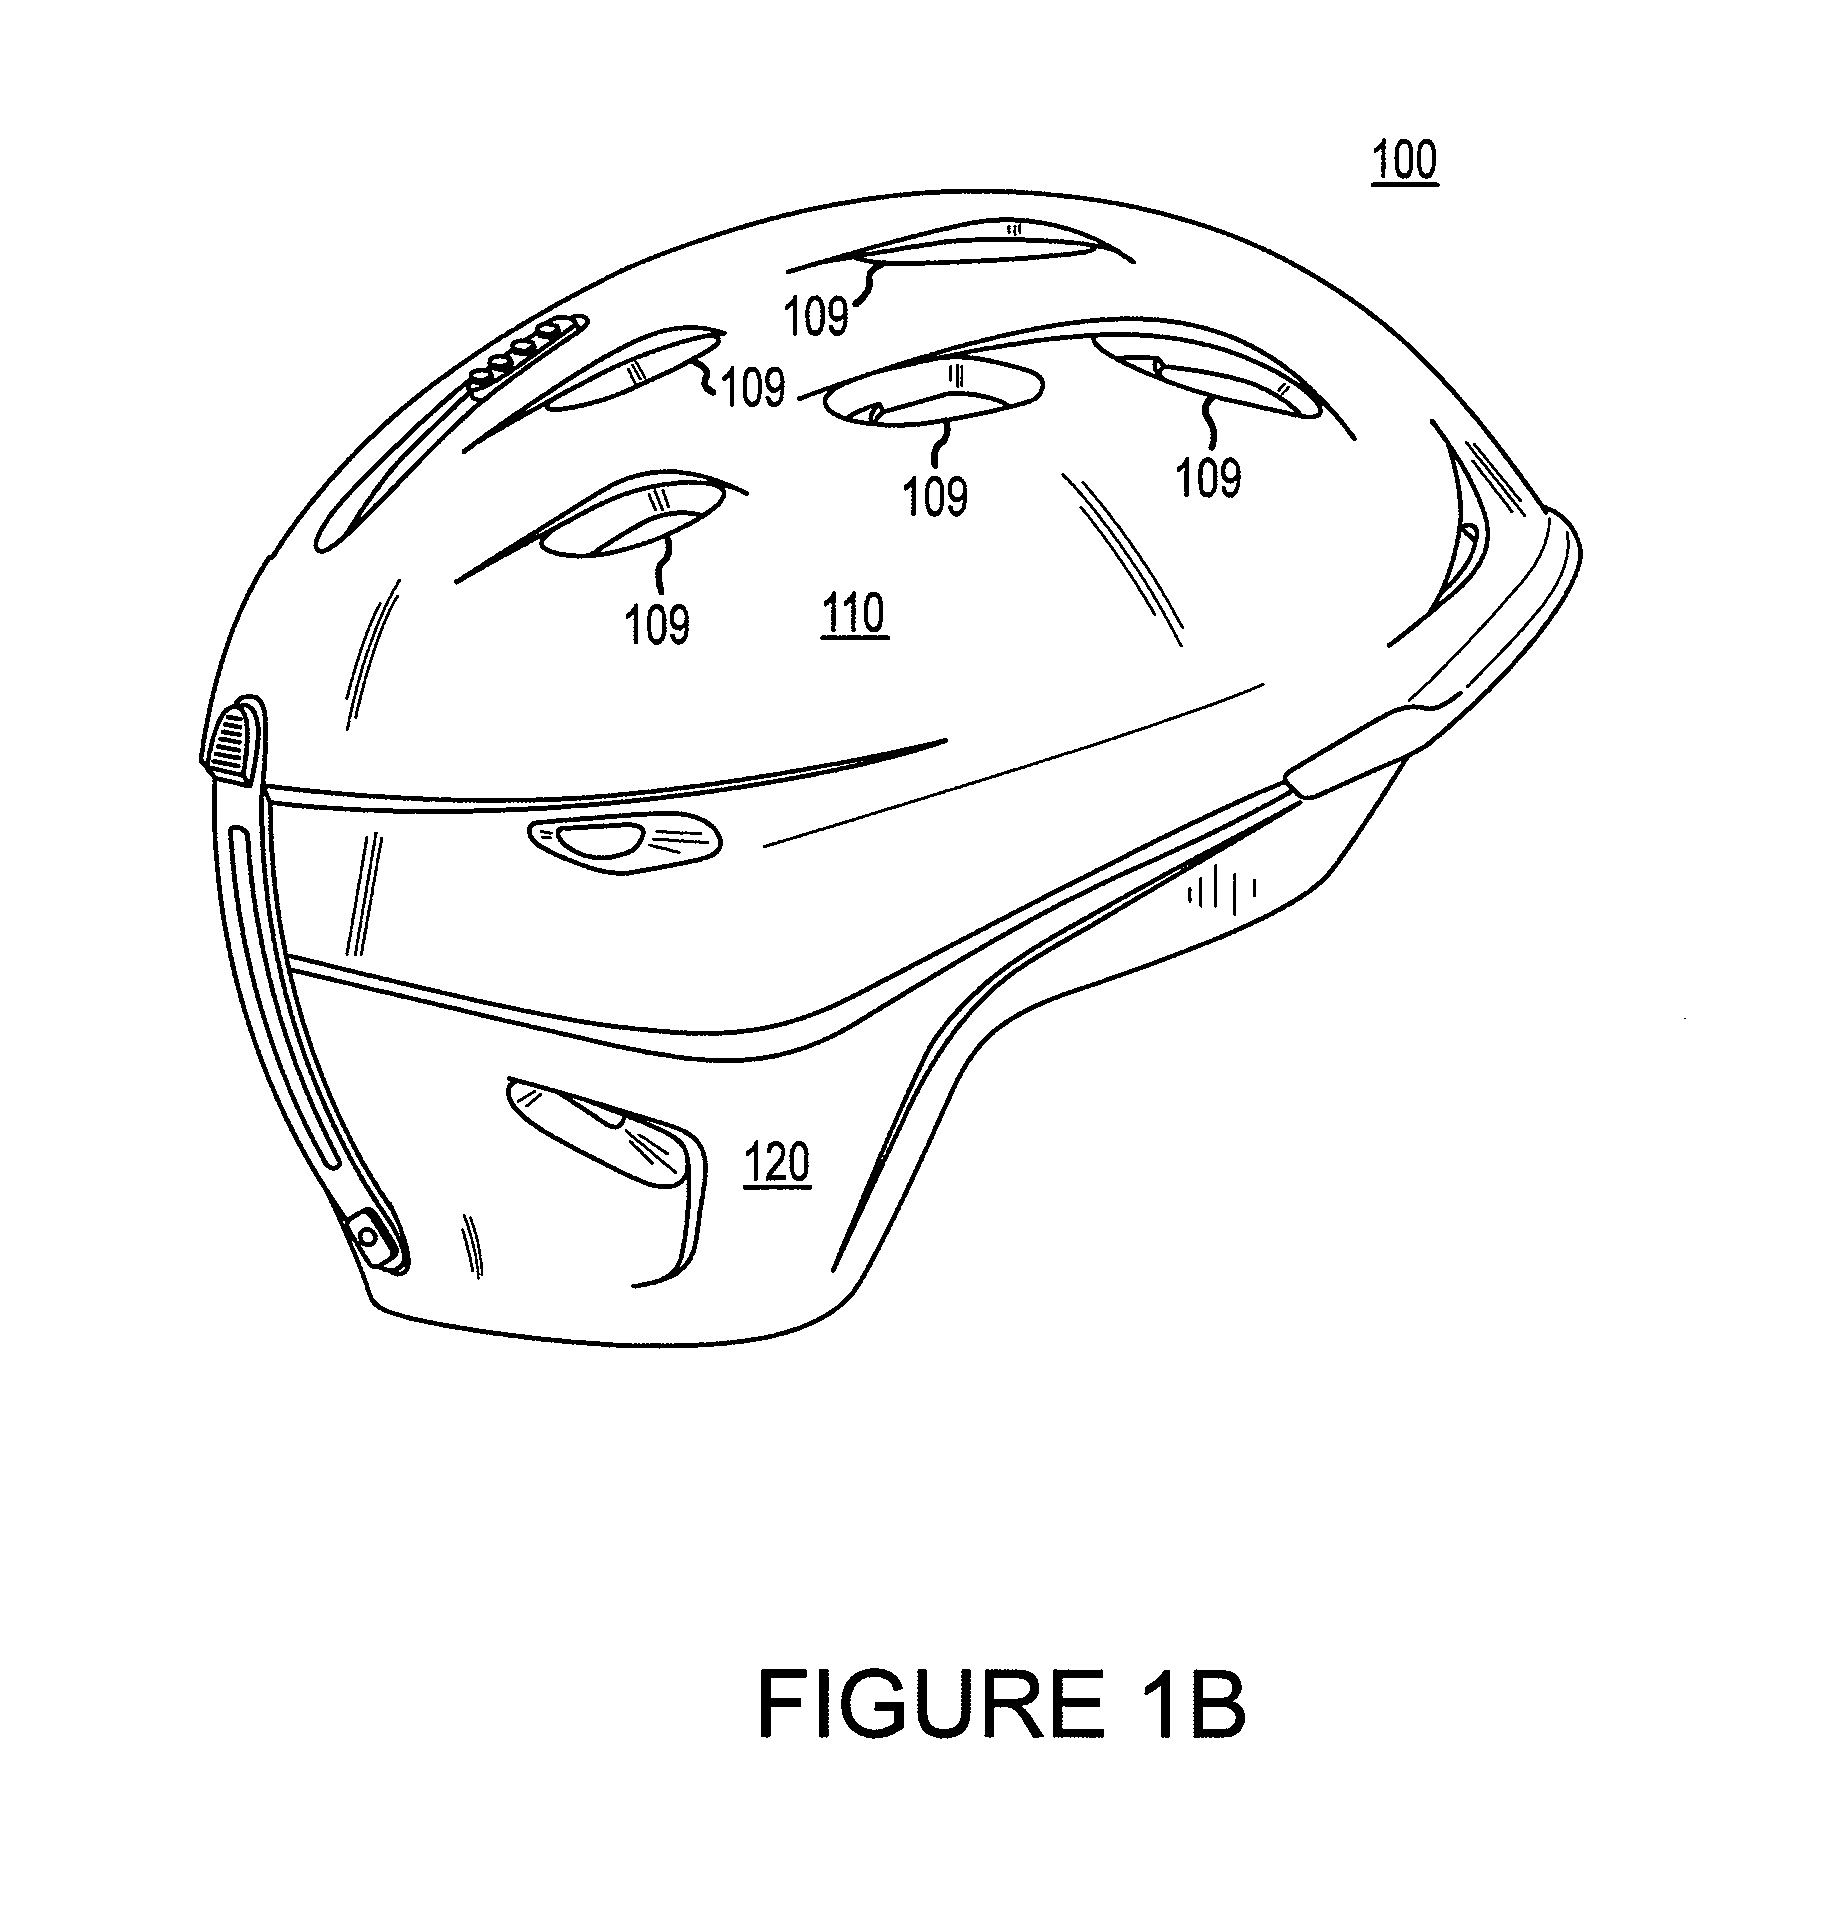 Multi-component helmet with ventilation shutter